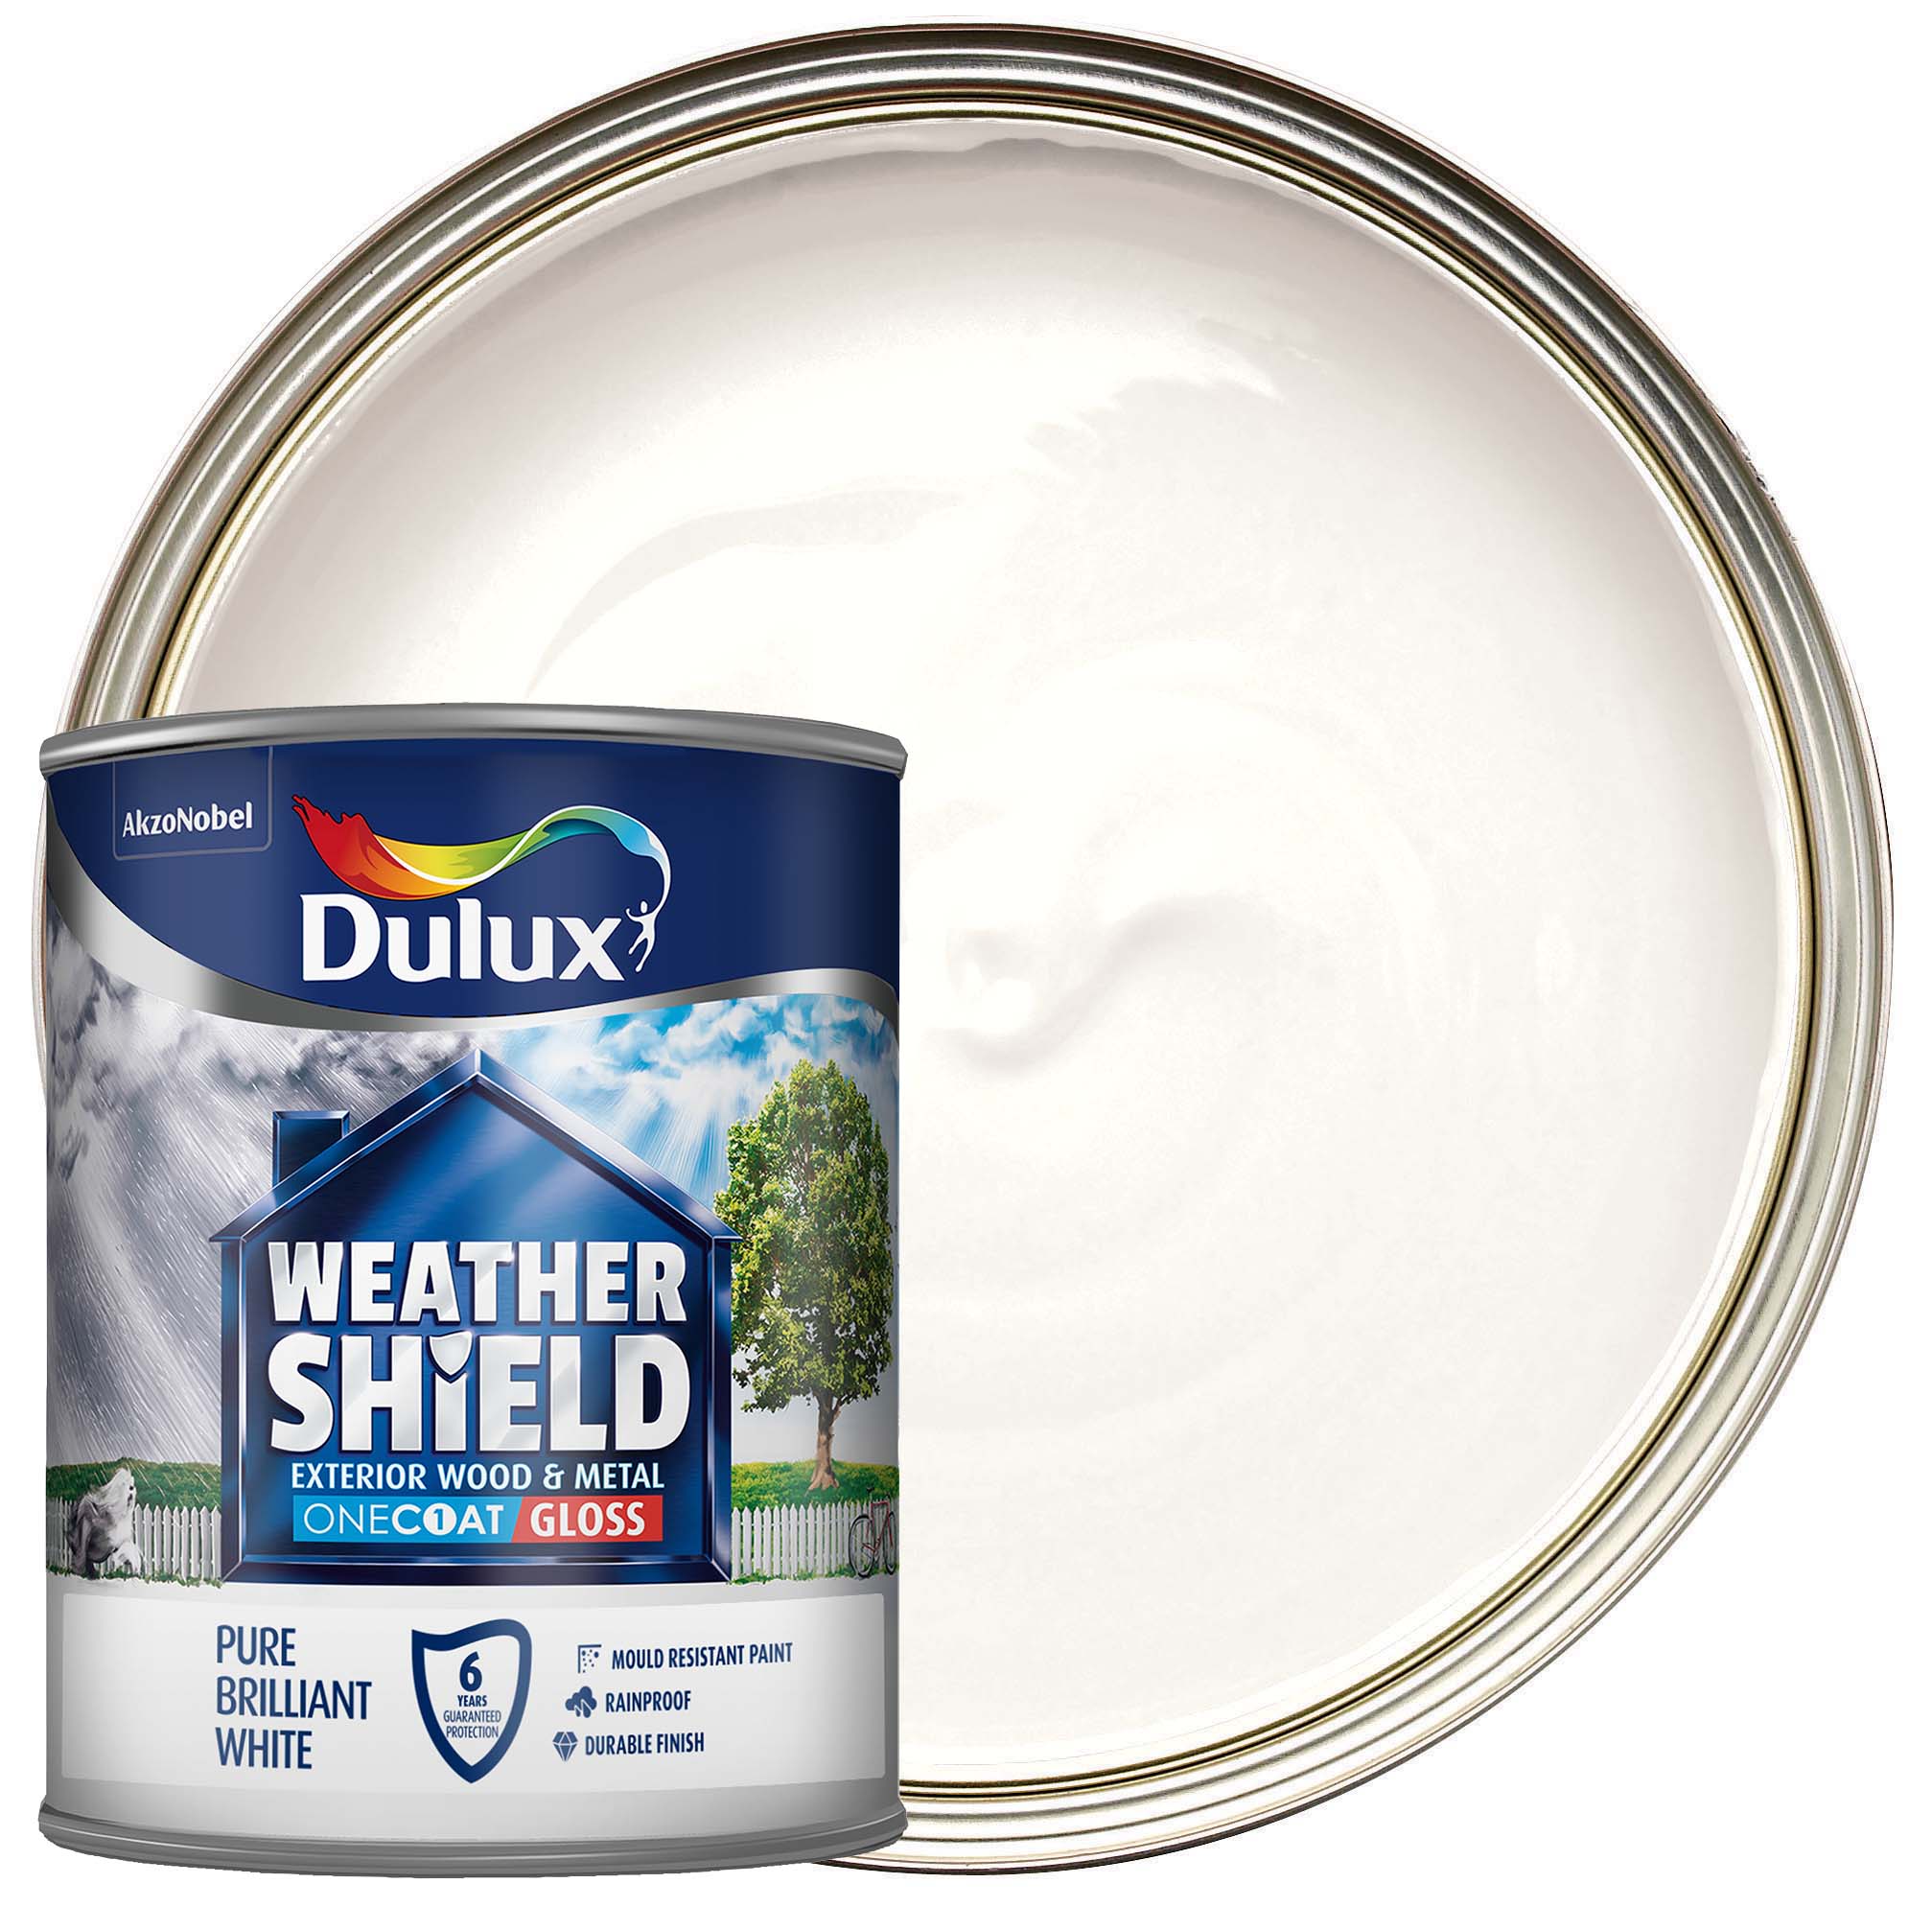 Image of Dulux Weathershield One Coat Gloss Paint - Pure Brilliant White - 750ml